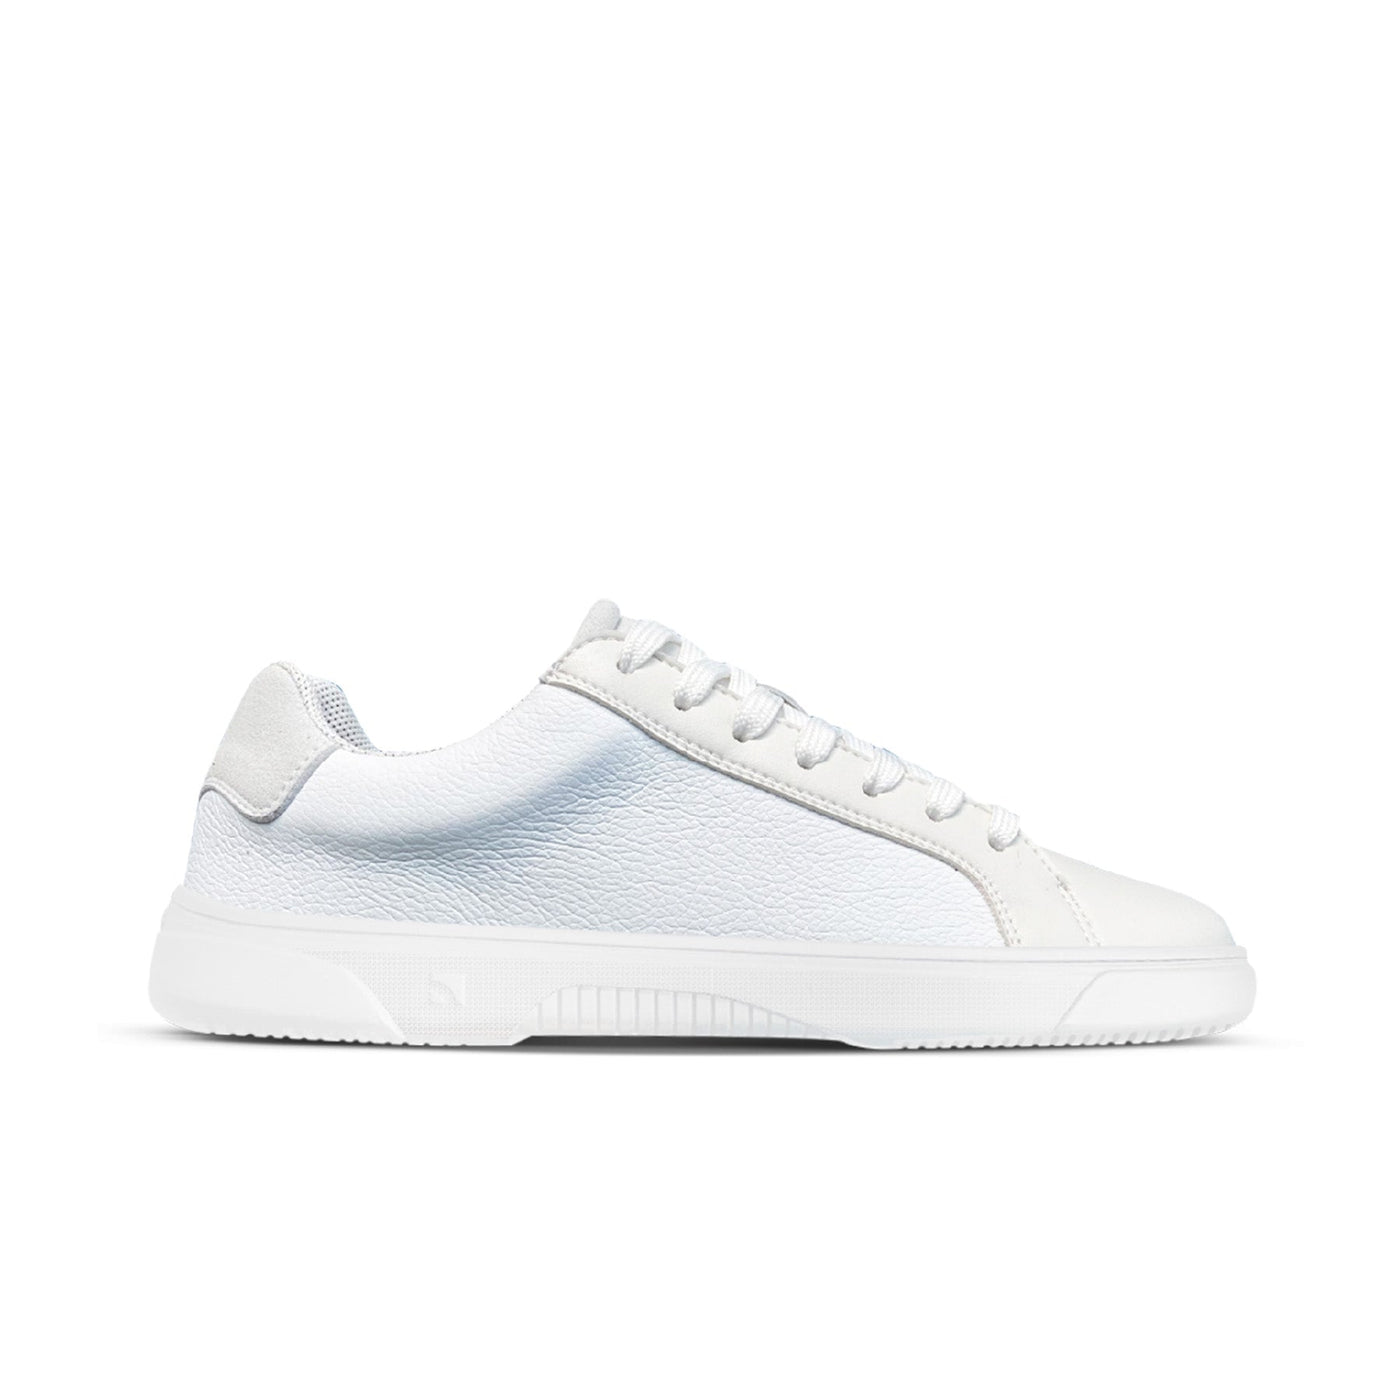 Barebarics Zoom Sneaker - All White 45 - Like New